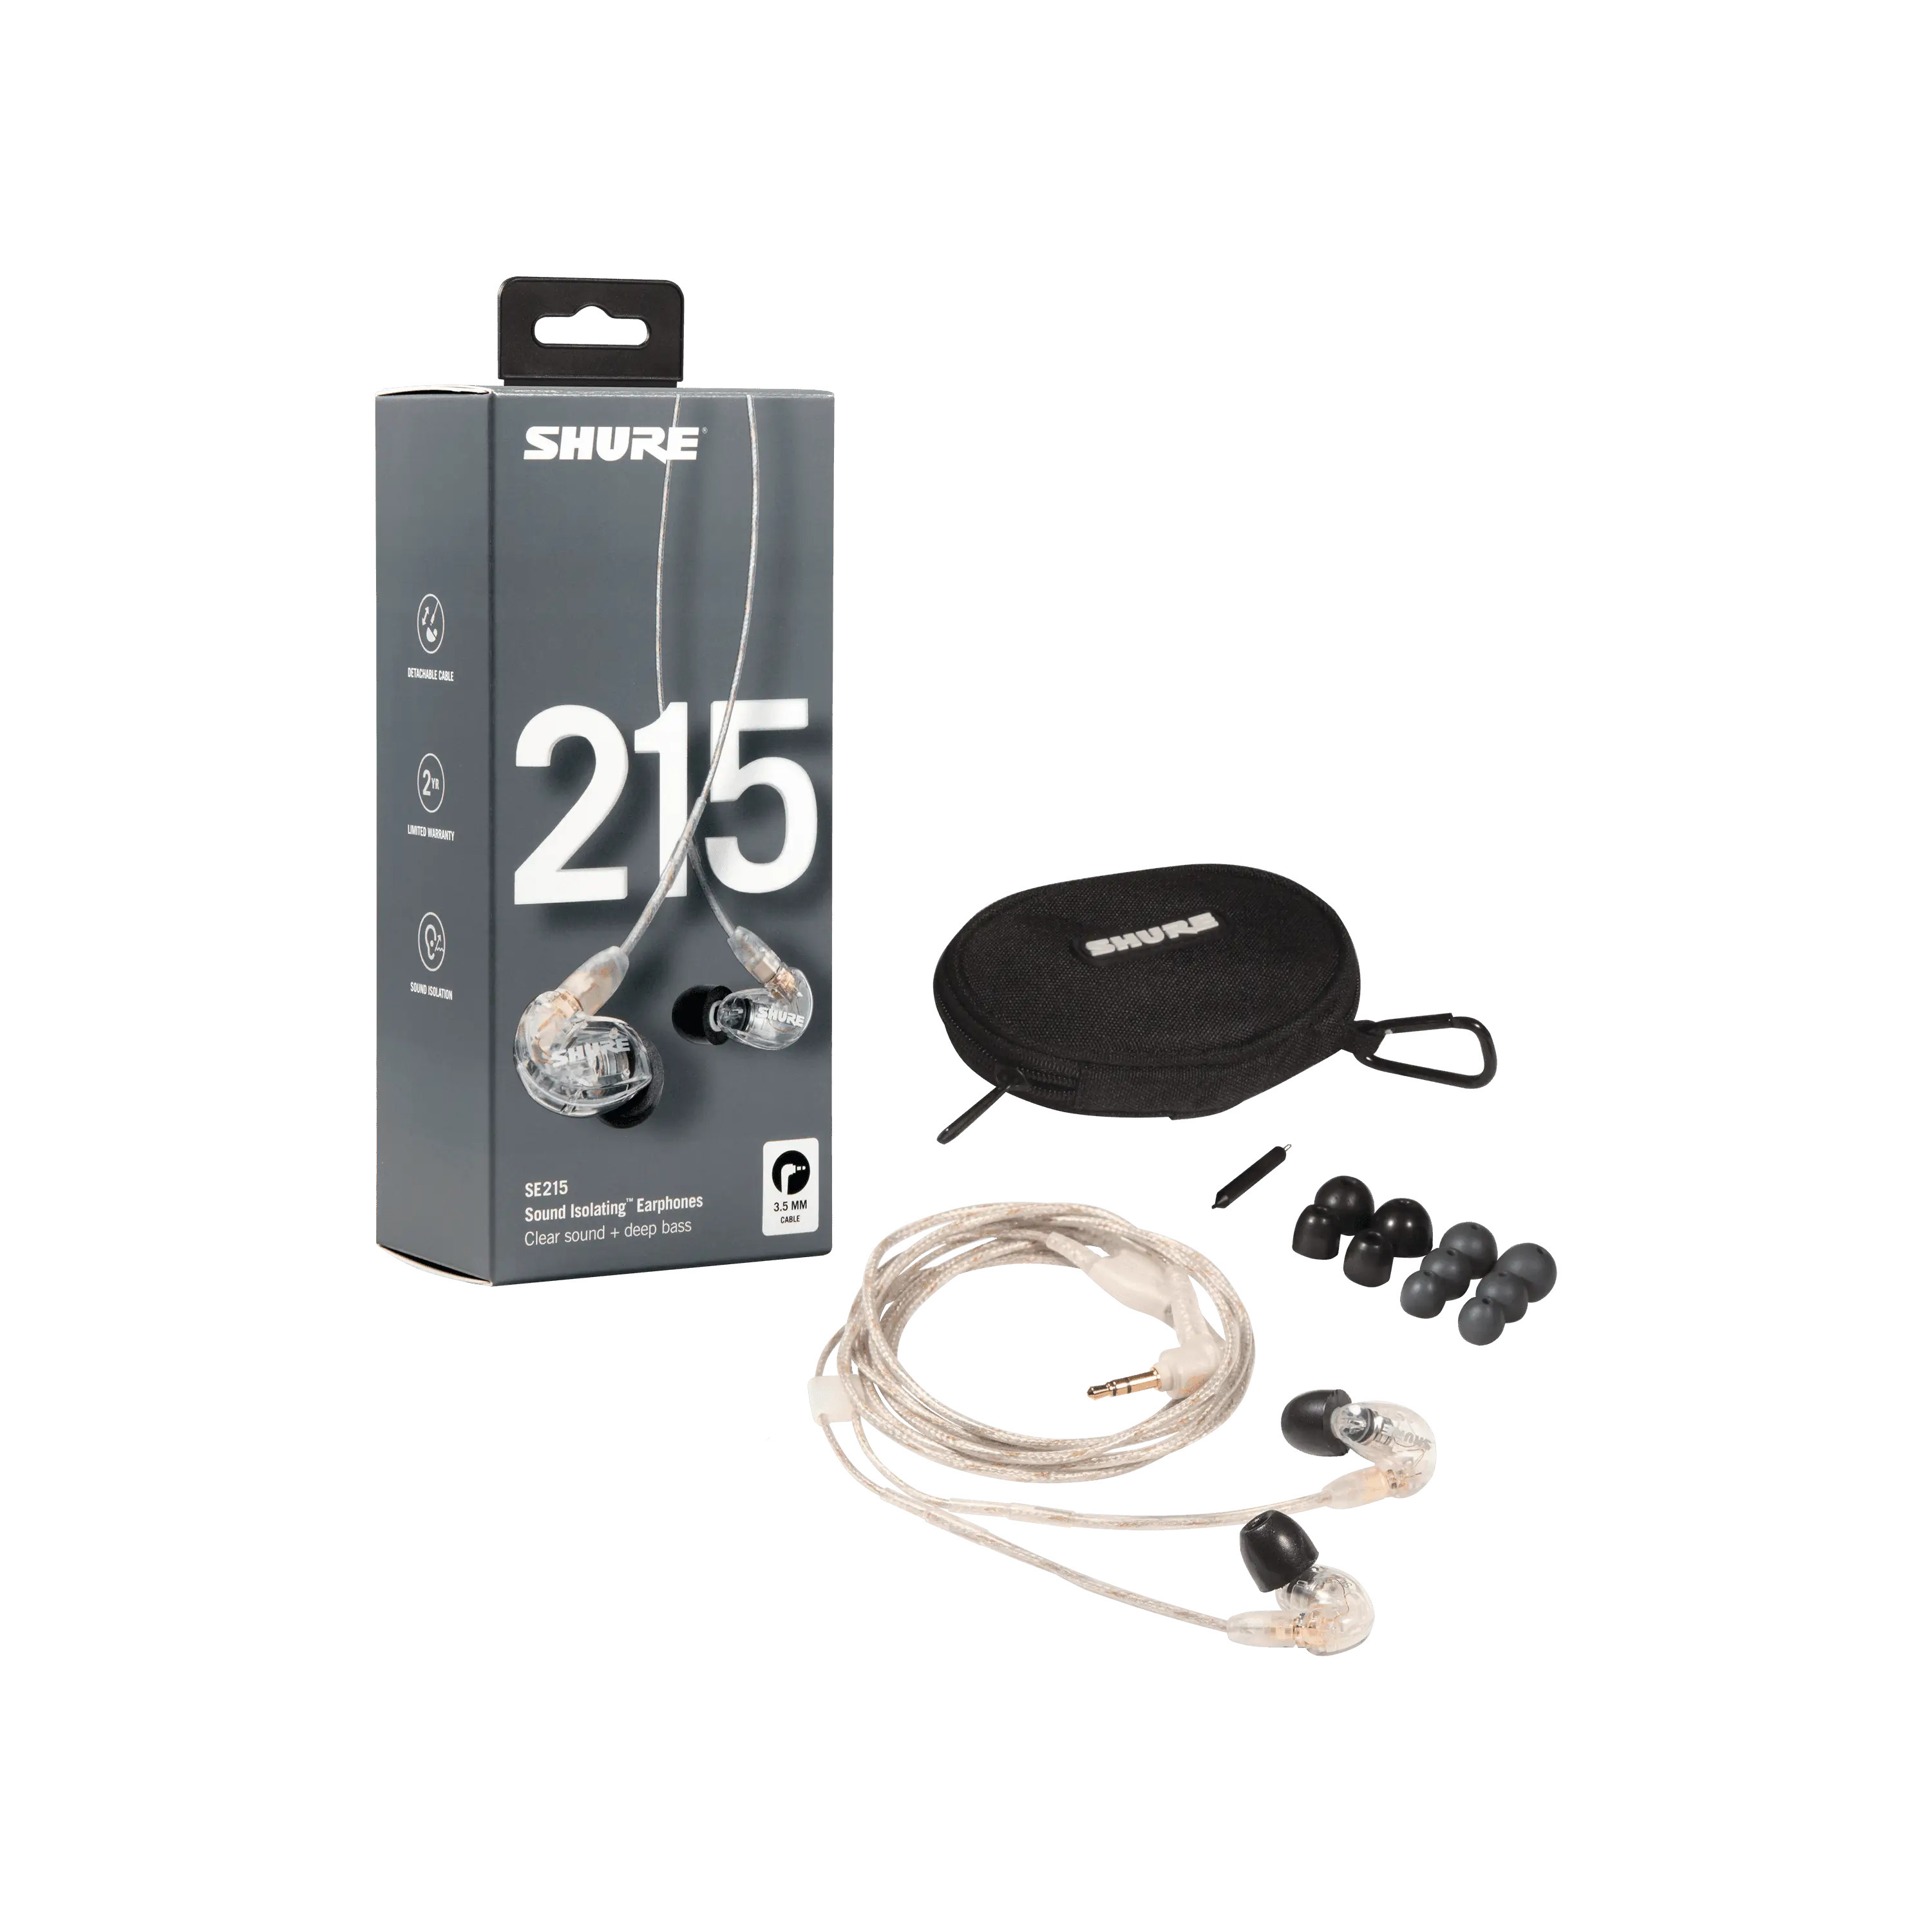 Shure SE215 PRO Professional Sound Isolating Ergonomic Earphones with Detachable Cable (Clear) -  SE215-CL